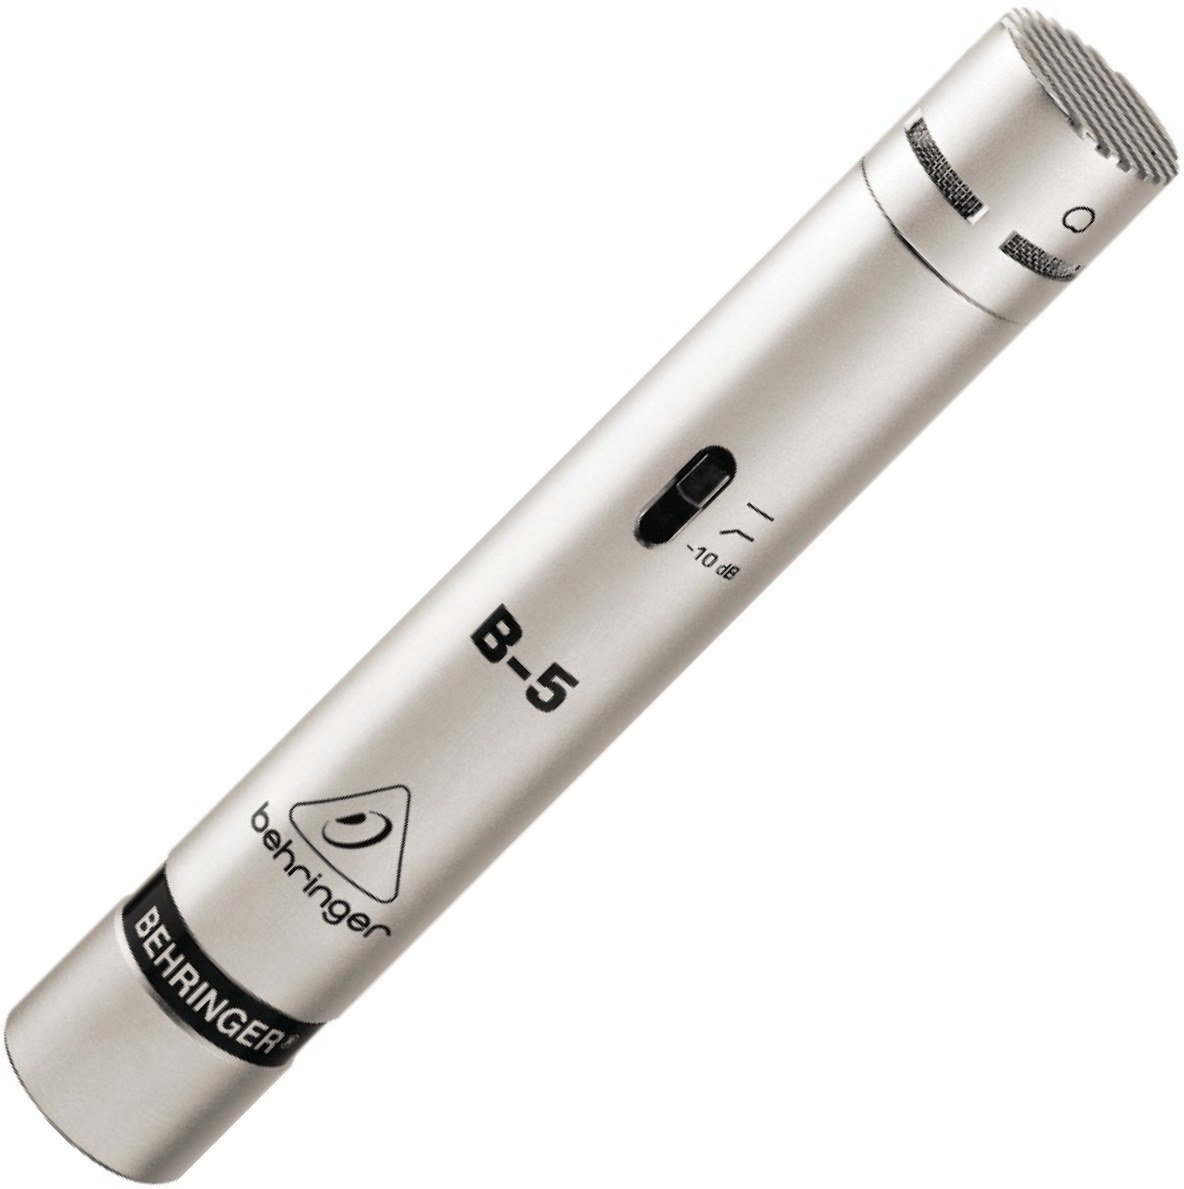 Kondenzátorový nástrojový mikrofon Behringer B-5 Condenser Microphone